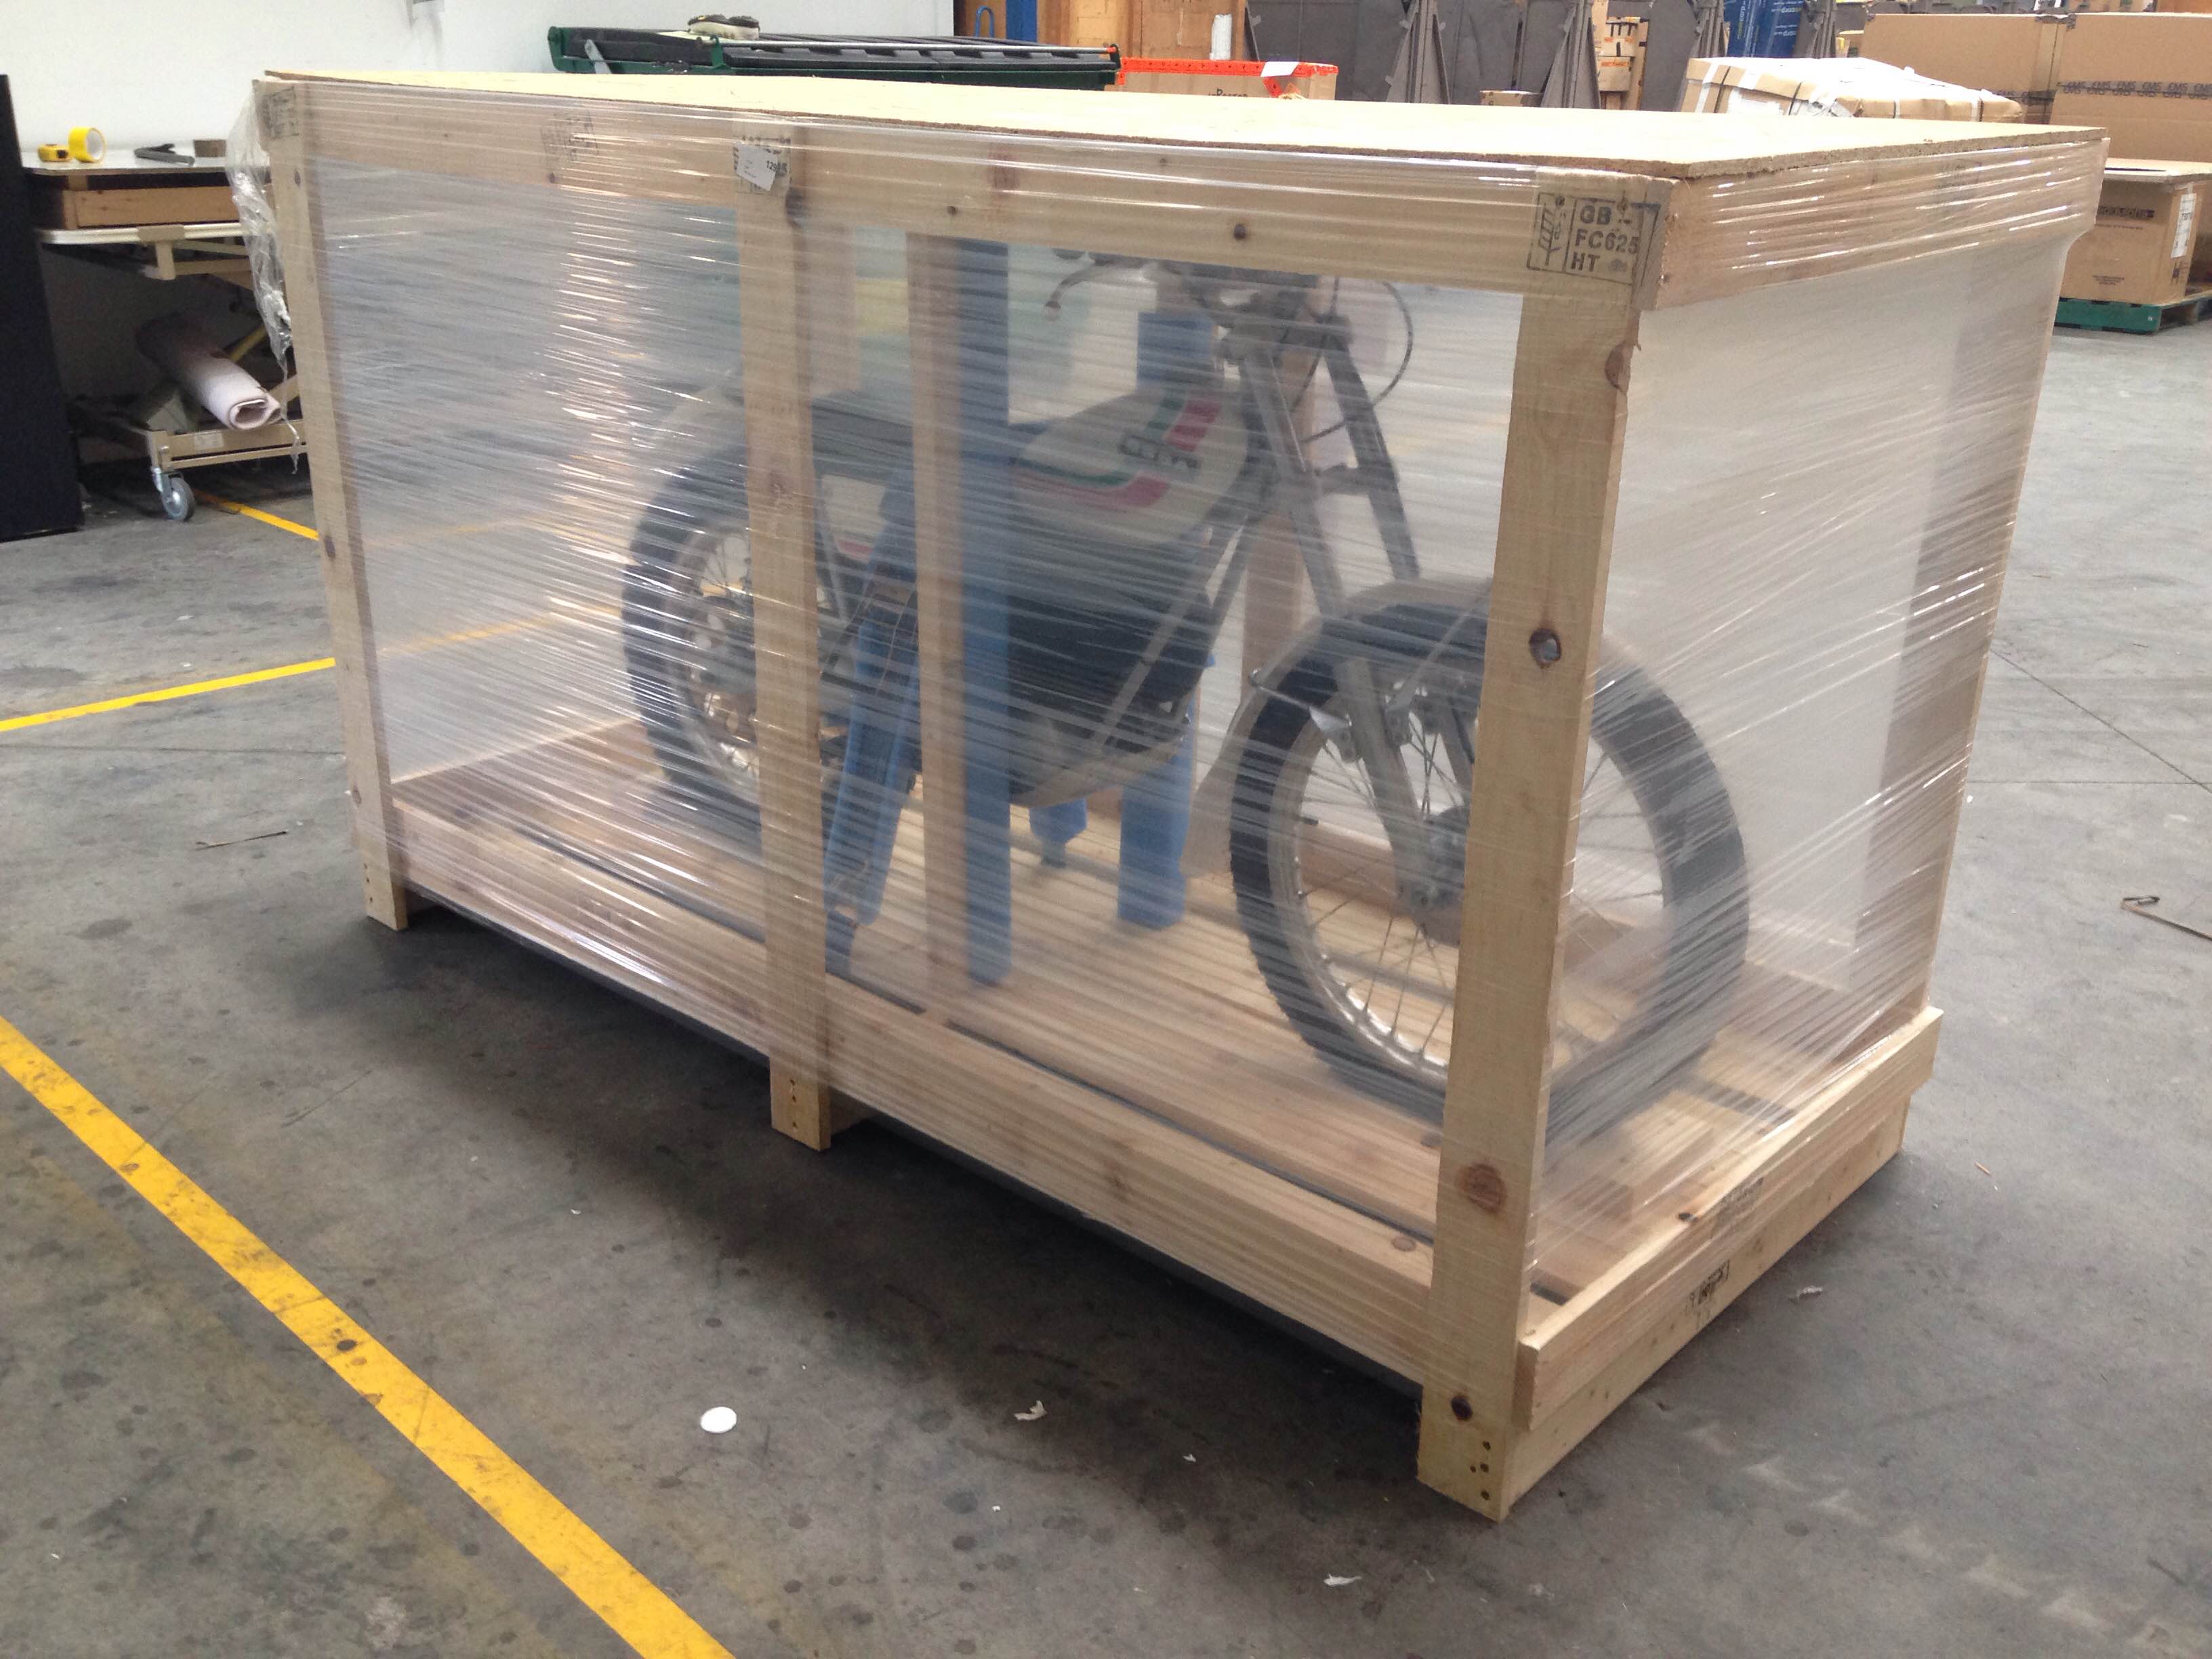 Shipping a motorbike overseas